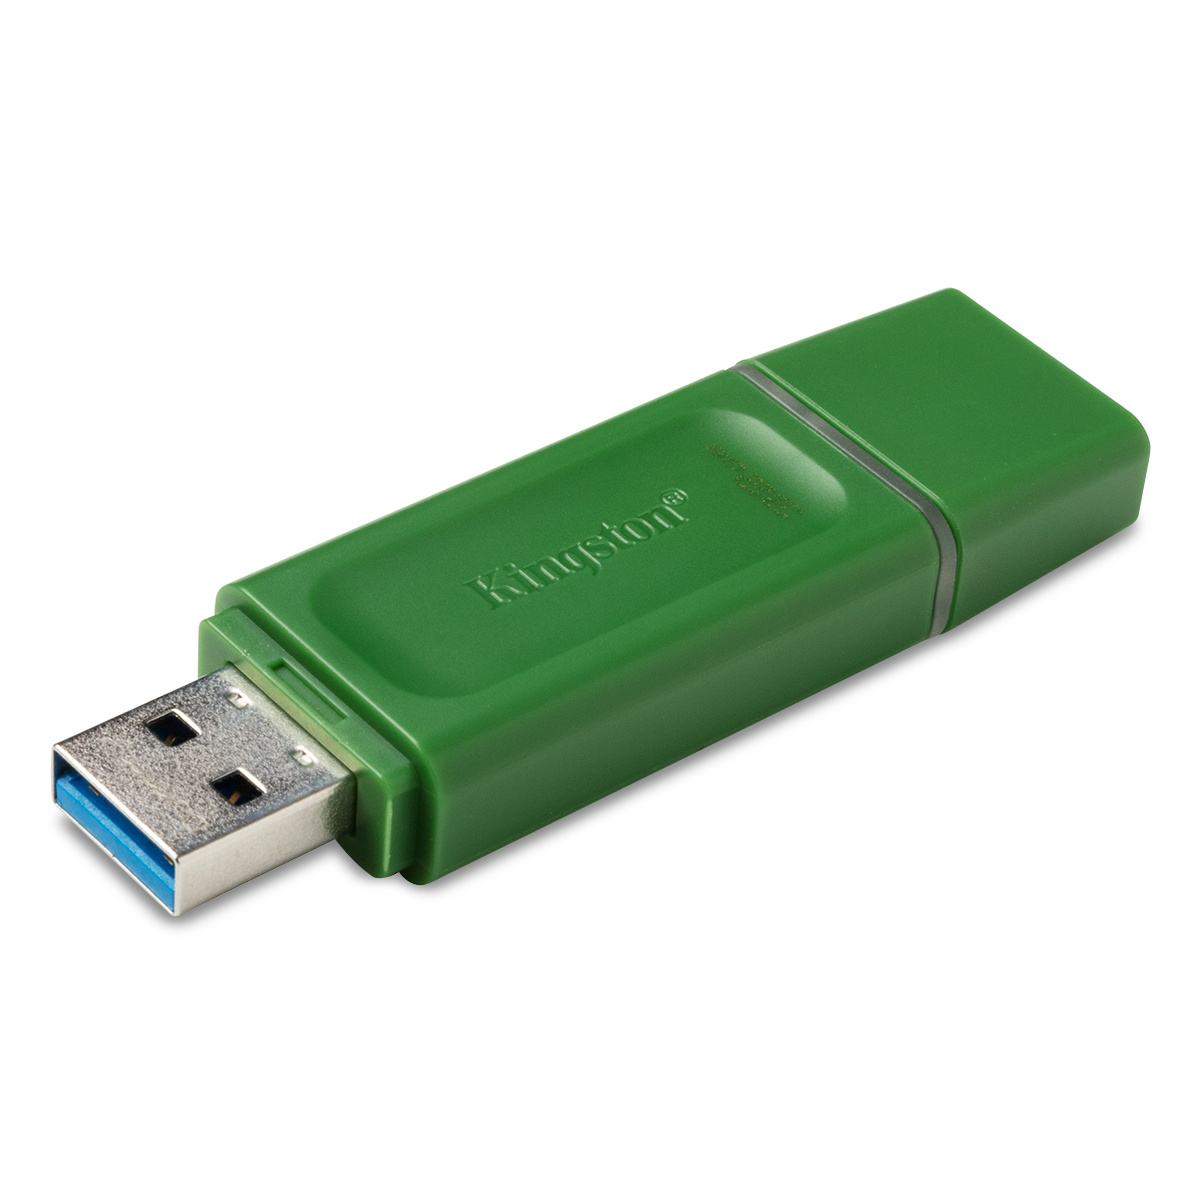 USB 32 GB VERDE  KINGSTON FLASH DRIVE  GEN 1 | Office Depot Costa Rica